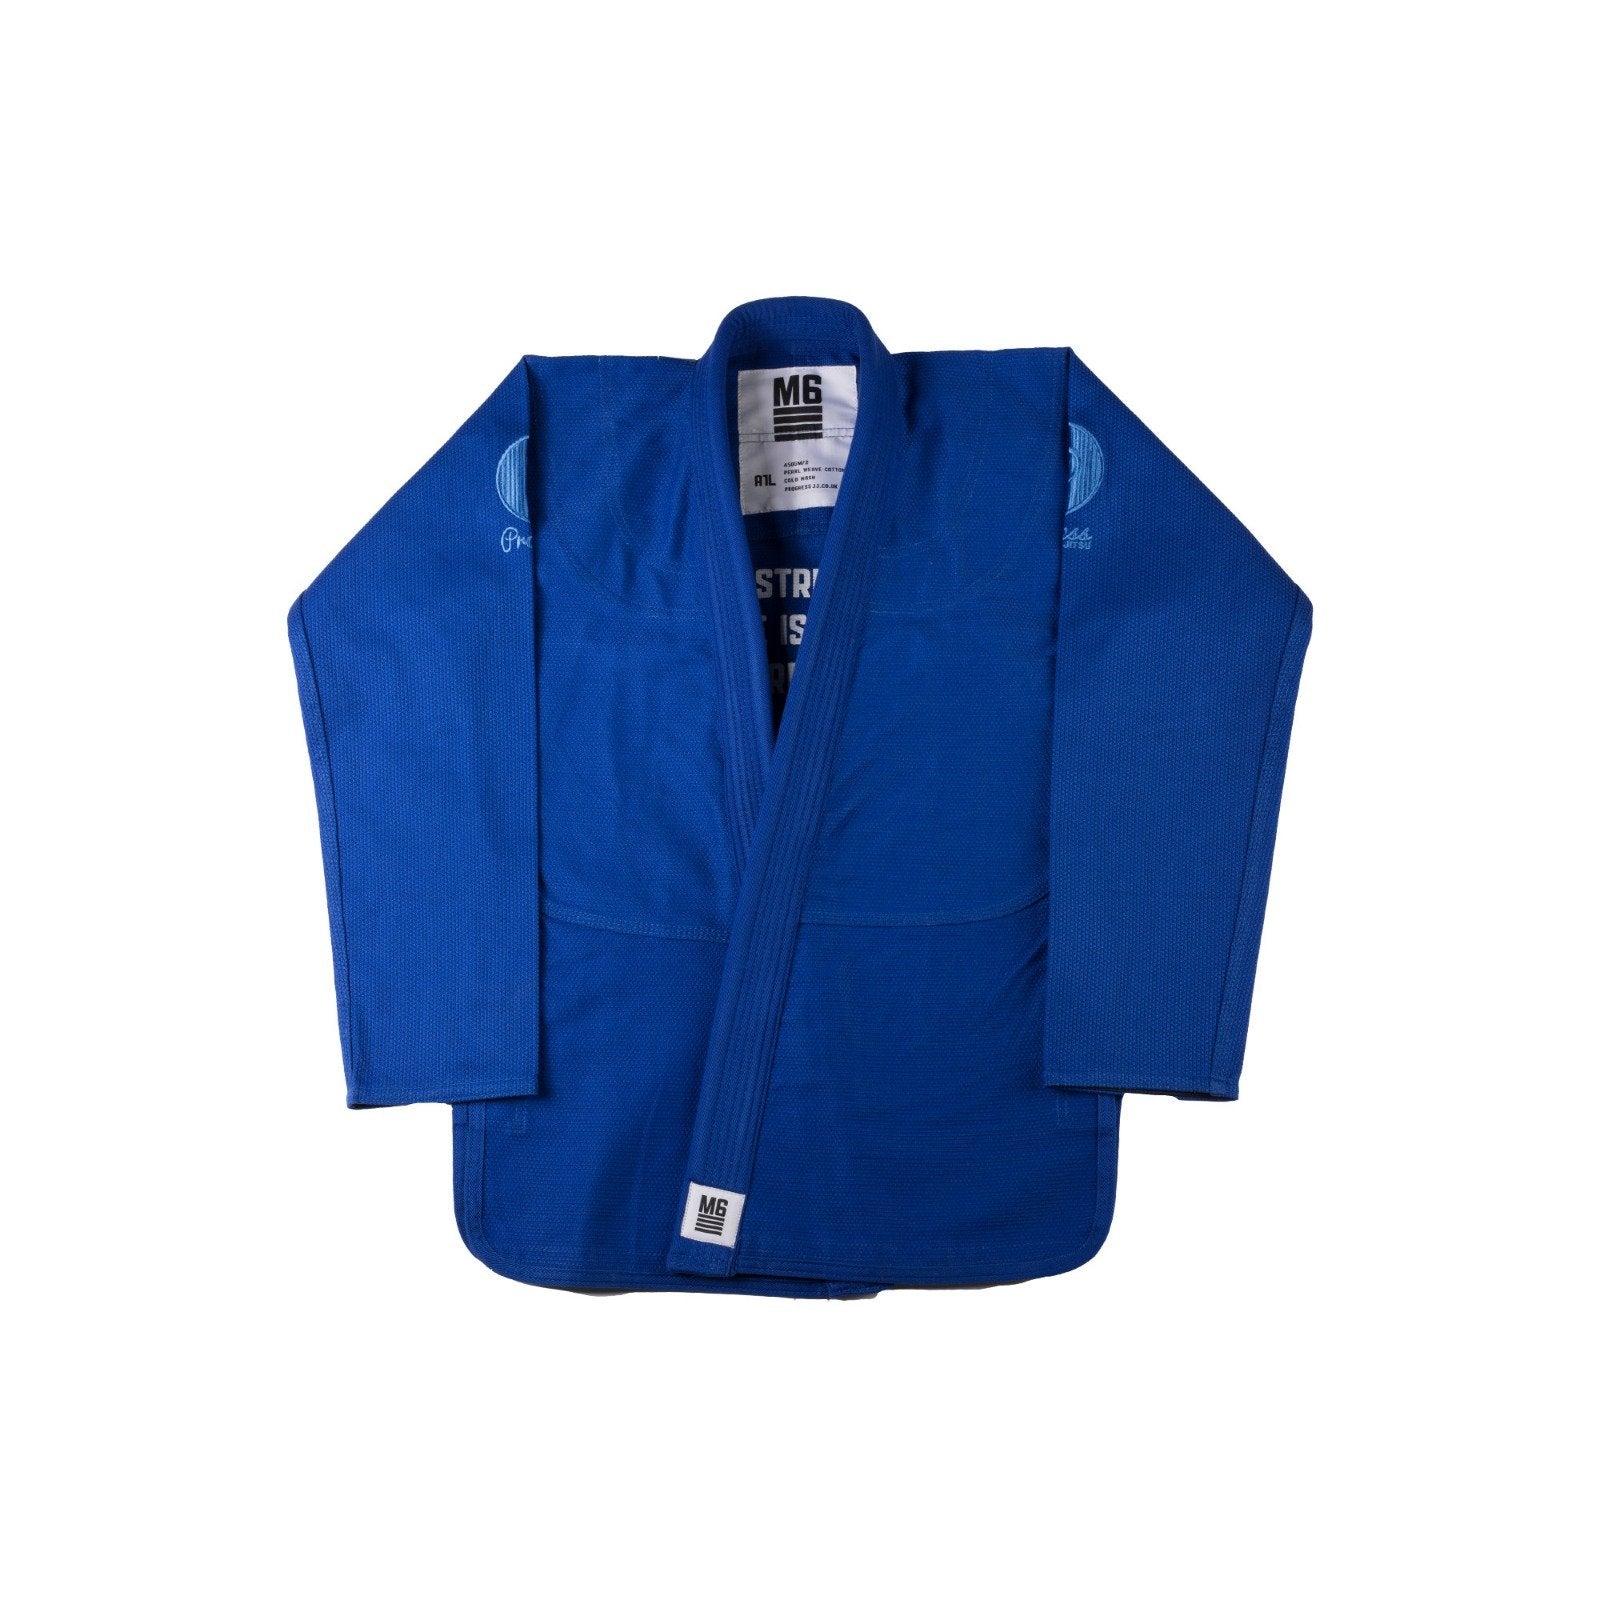 Ladies M6 Kimono Mark 4 - Blue